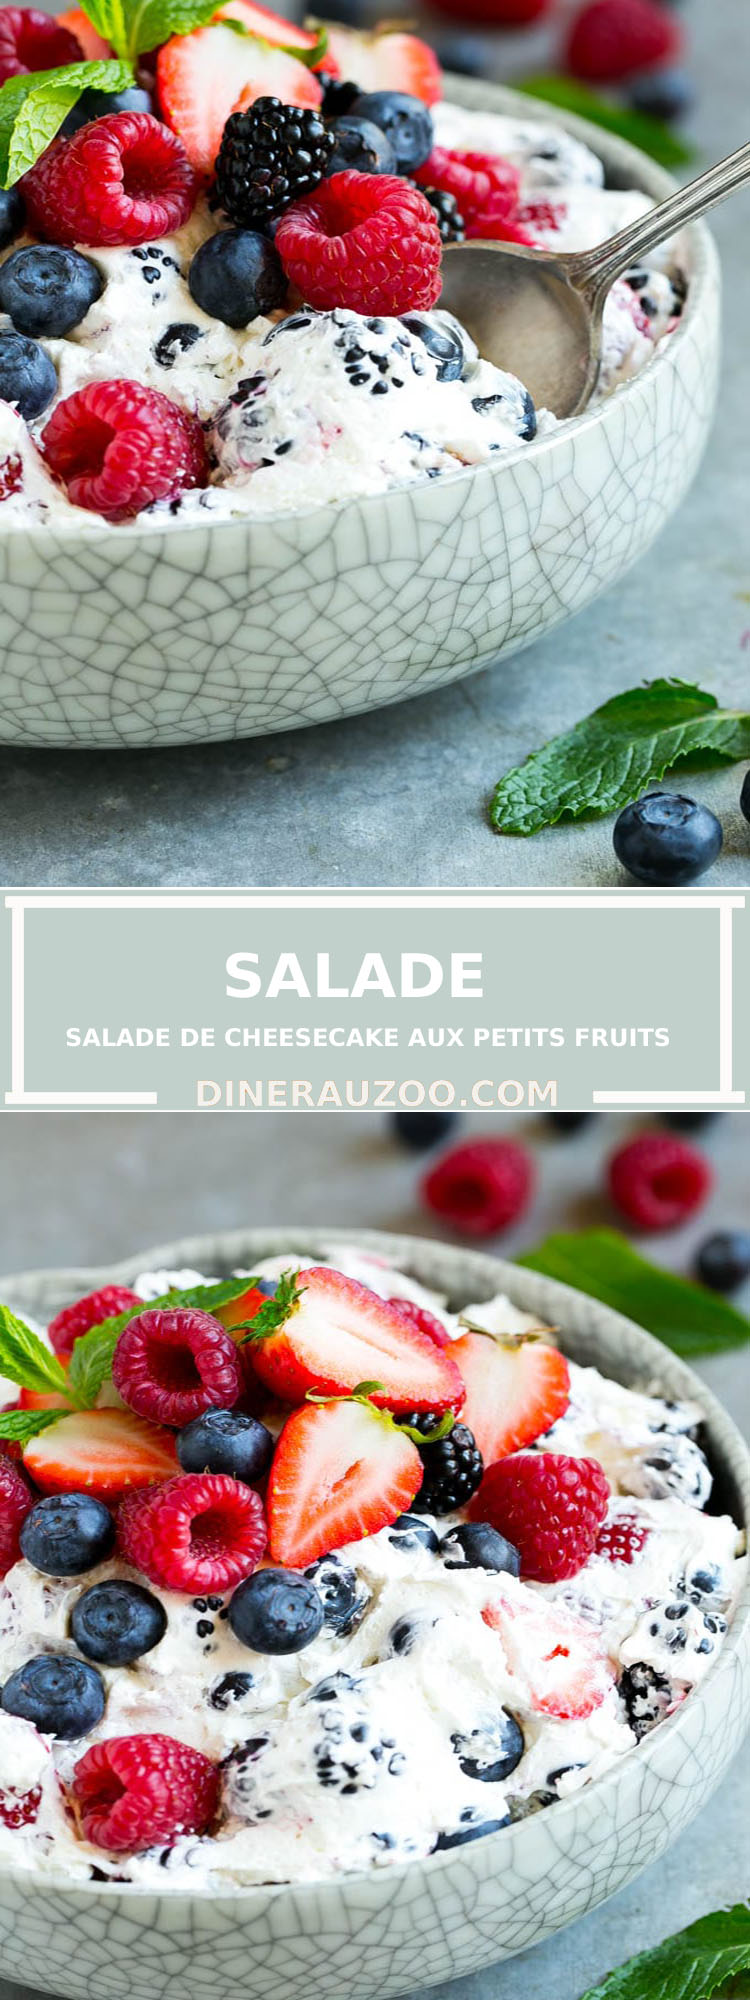 Salade de cheesecake aux petits fruits2